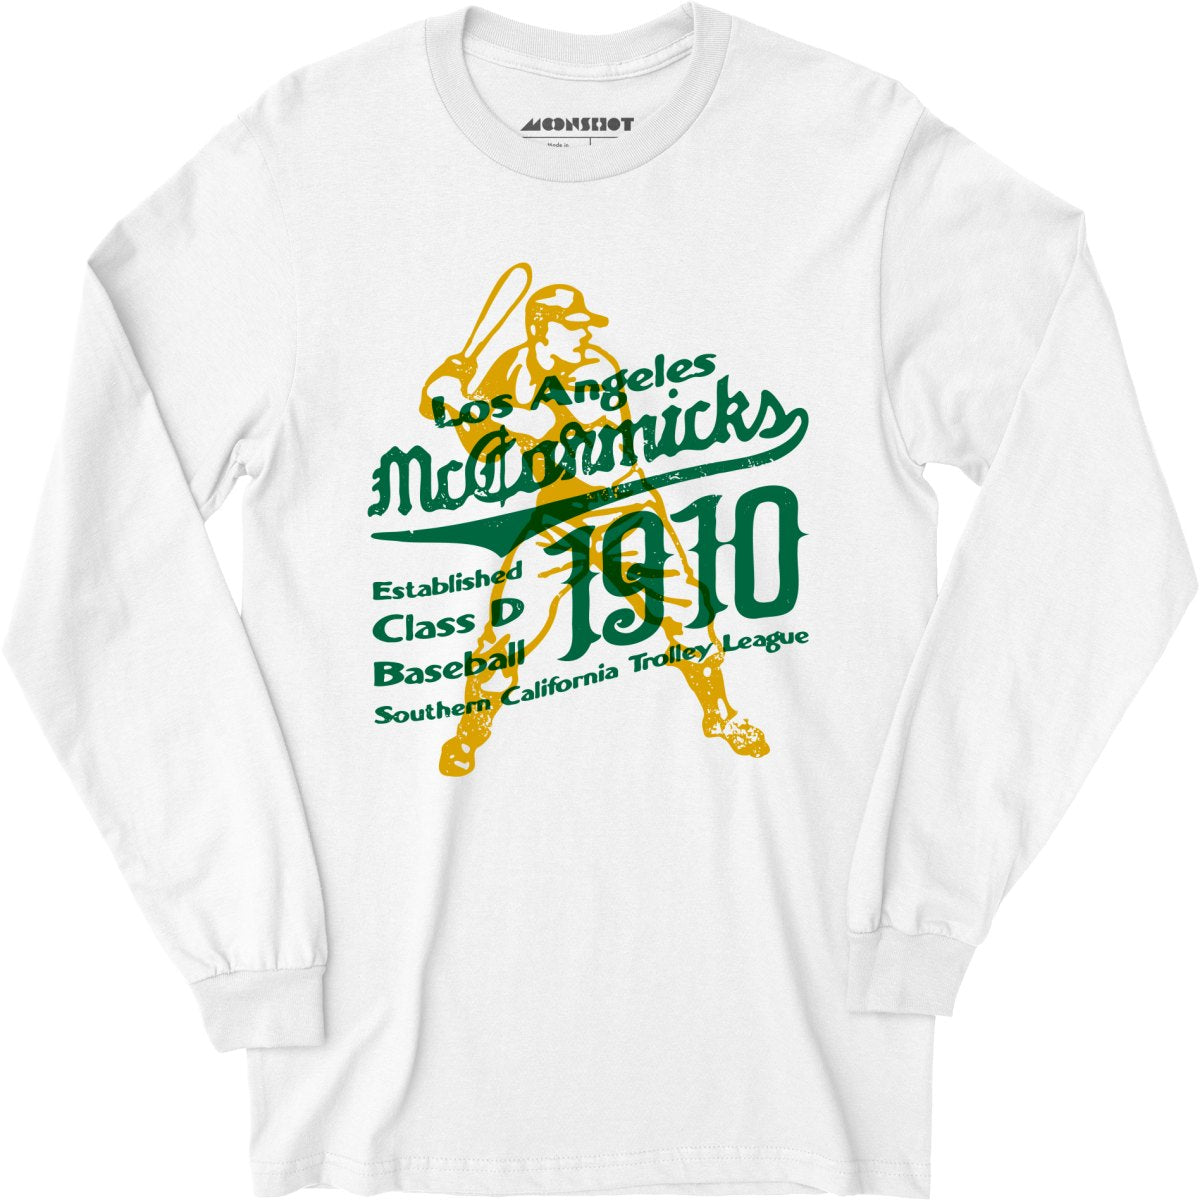 Los Angeles McCormick's - California - Vintage Defunct Baseball Teams - Long Sleeve T-Shirt